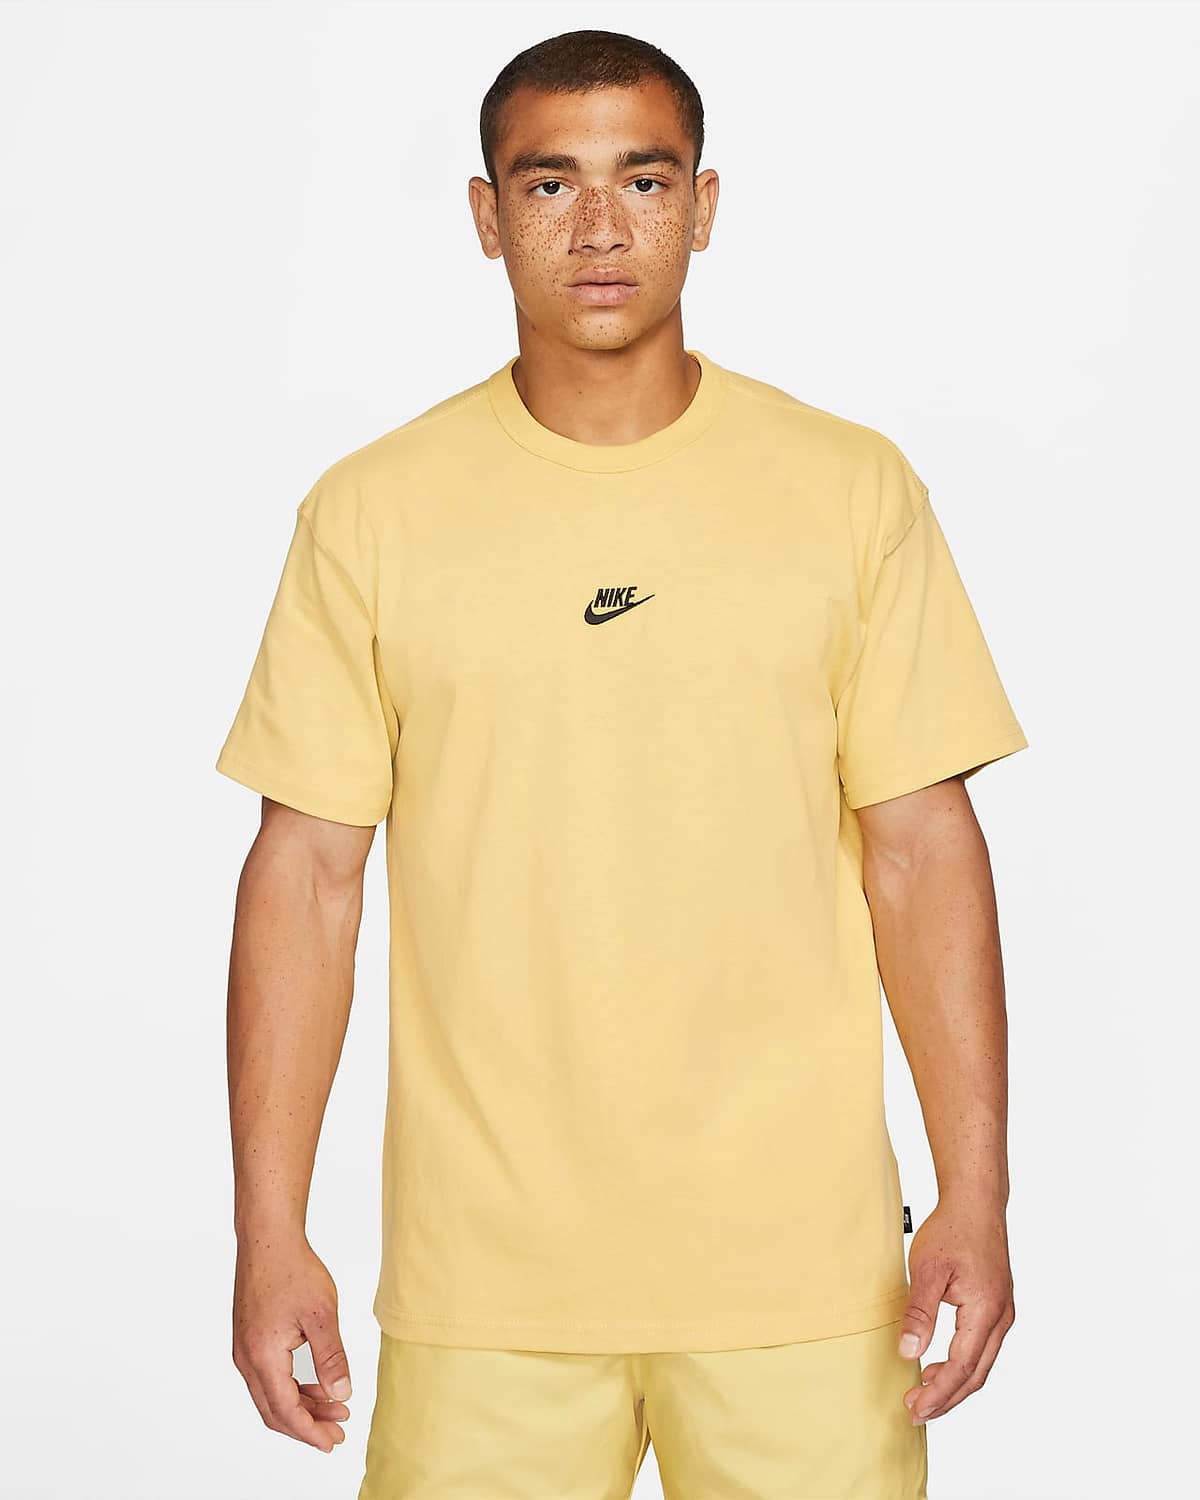 Cheap Nike T Shirts